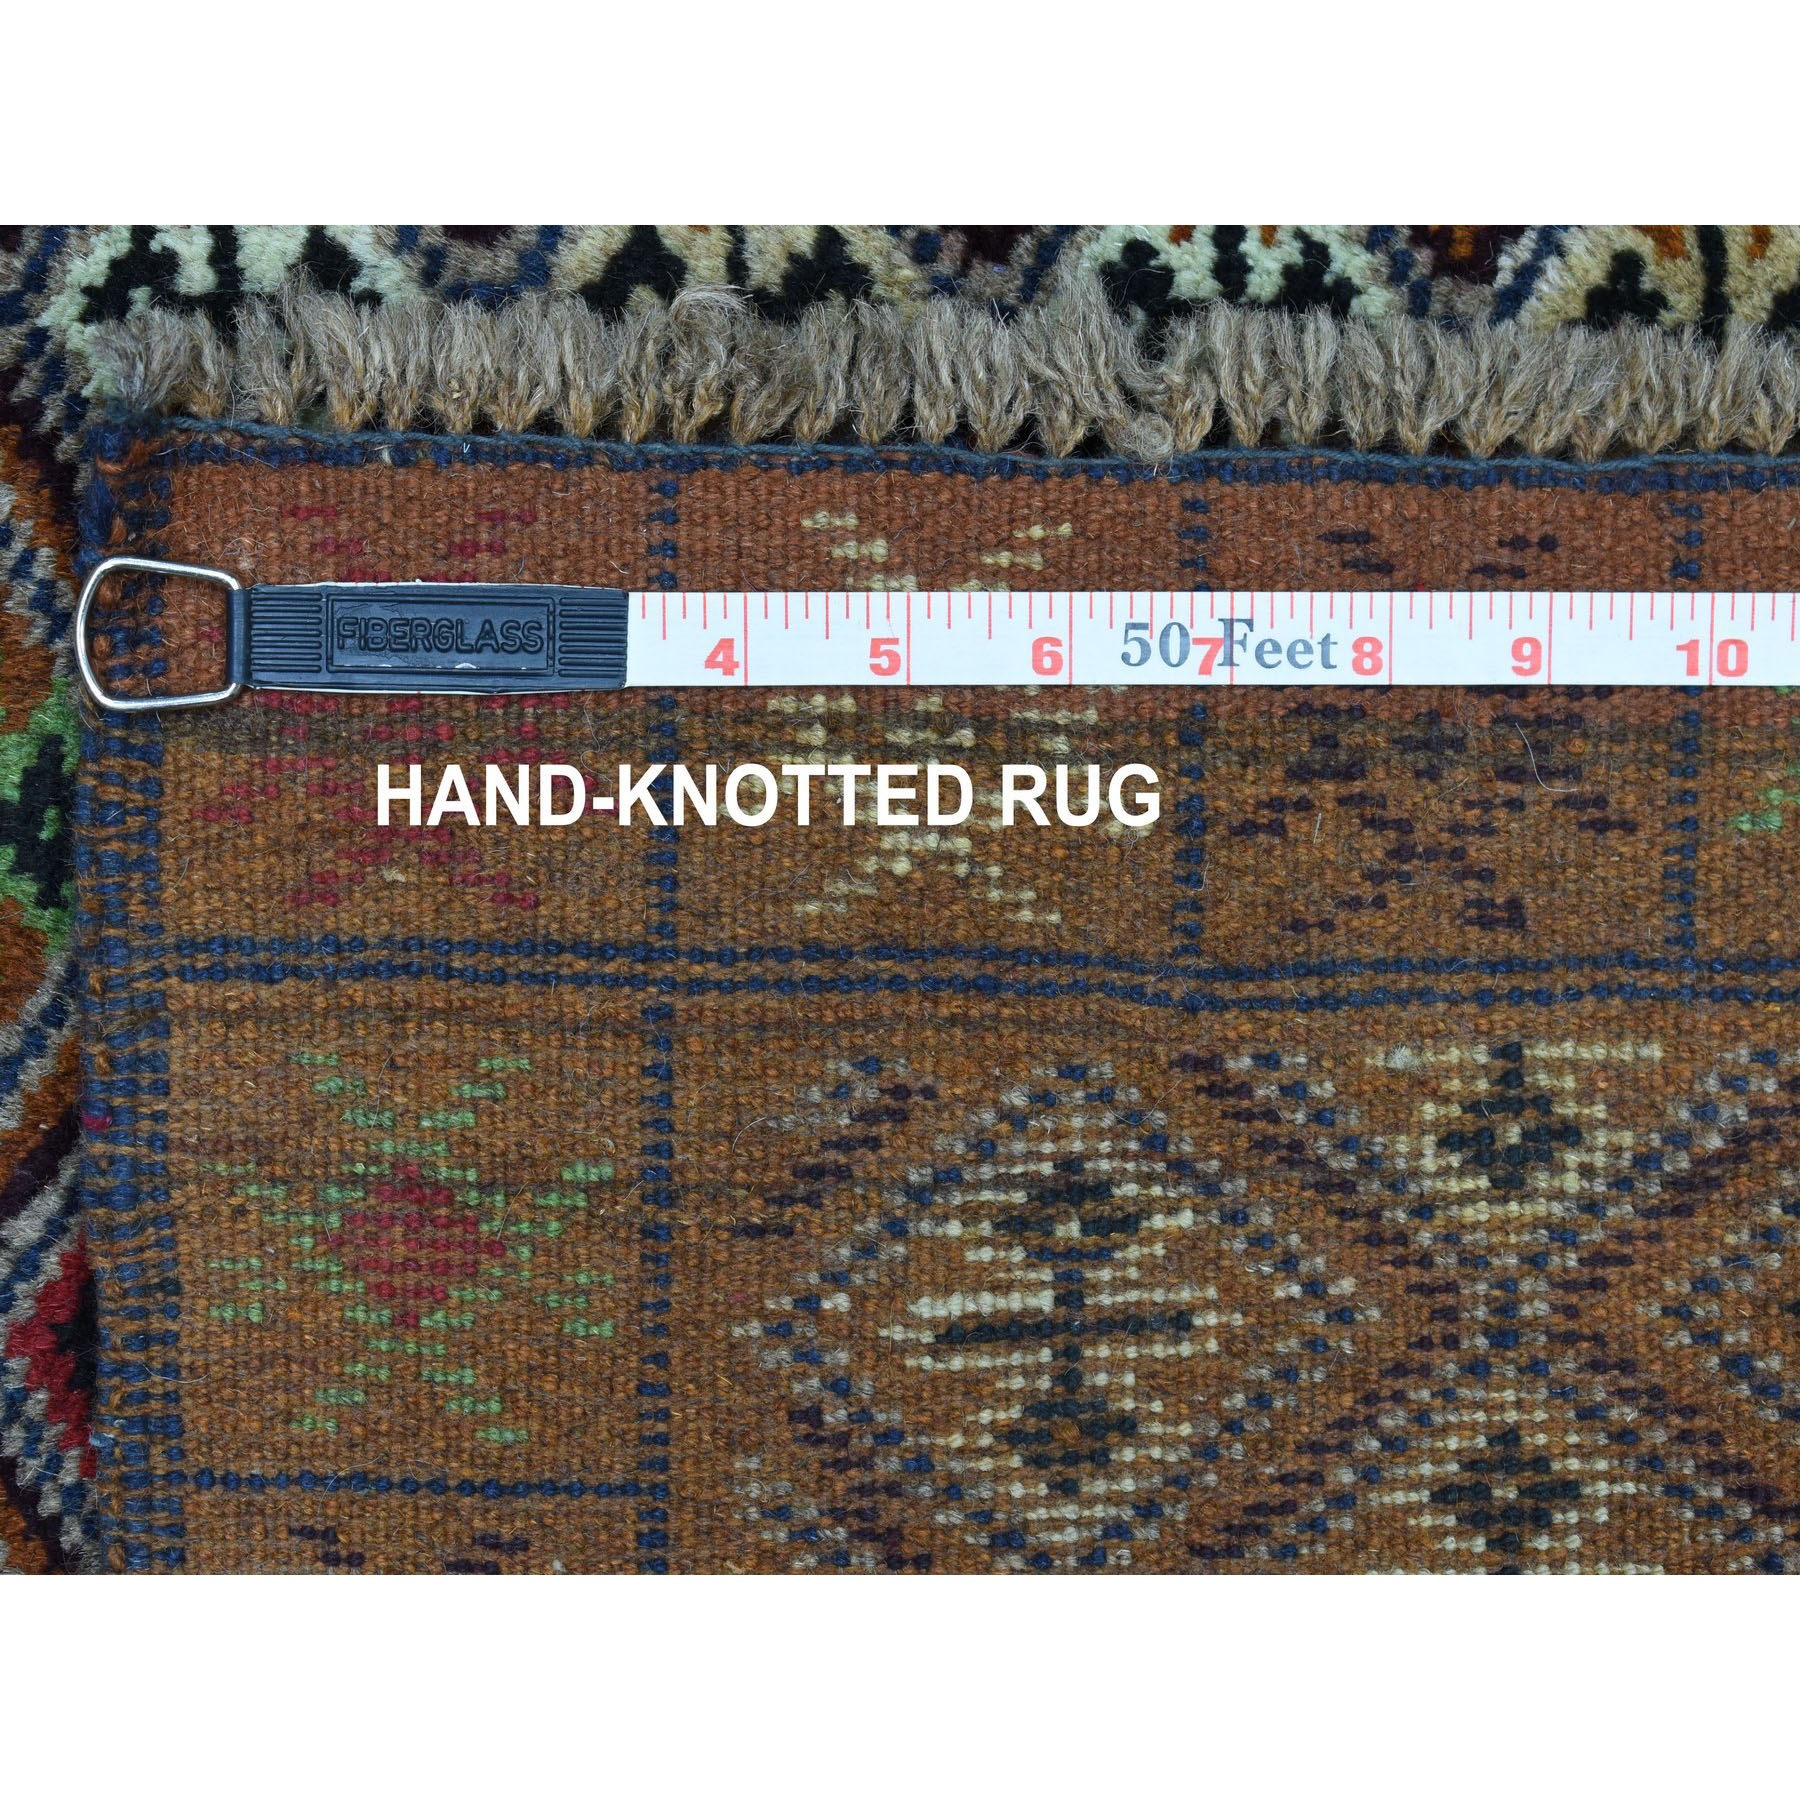 3'1"x4'8" Brown Colorful Afghan Baluch Geometric Design Hand Woven 100% Wool Oriental Rug 